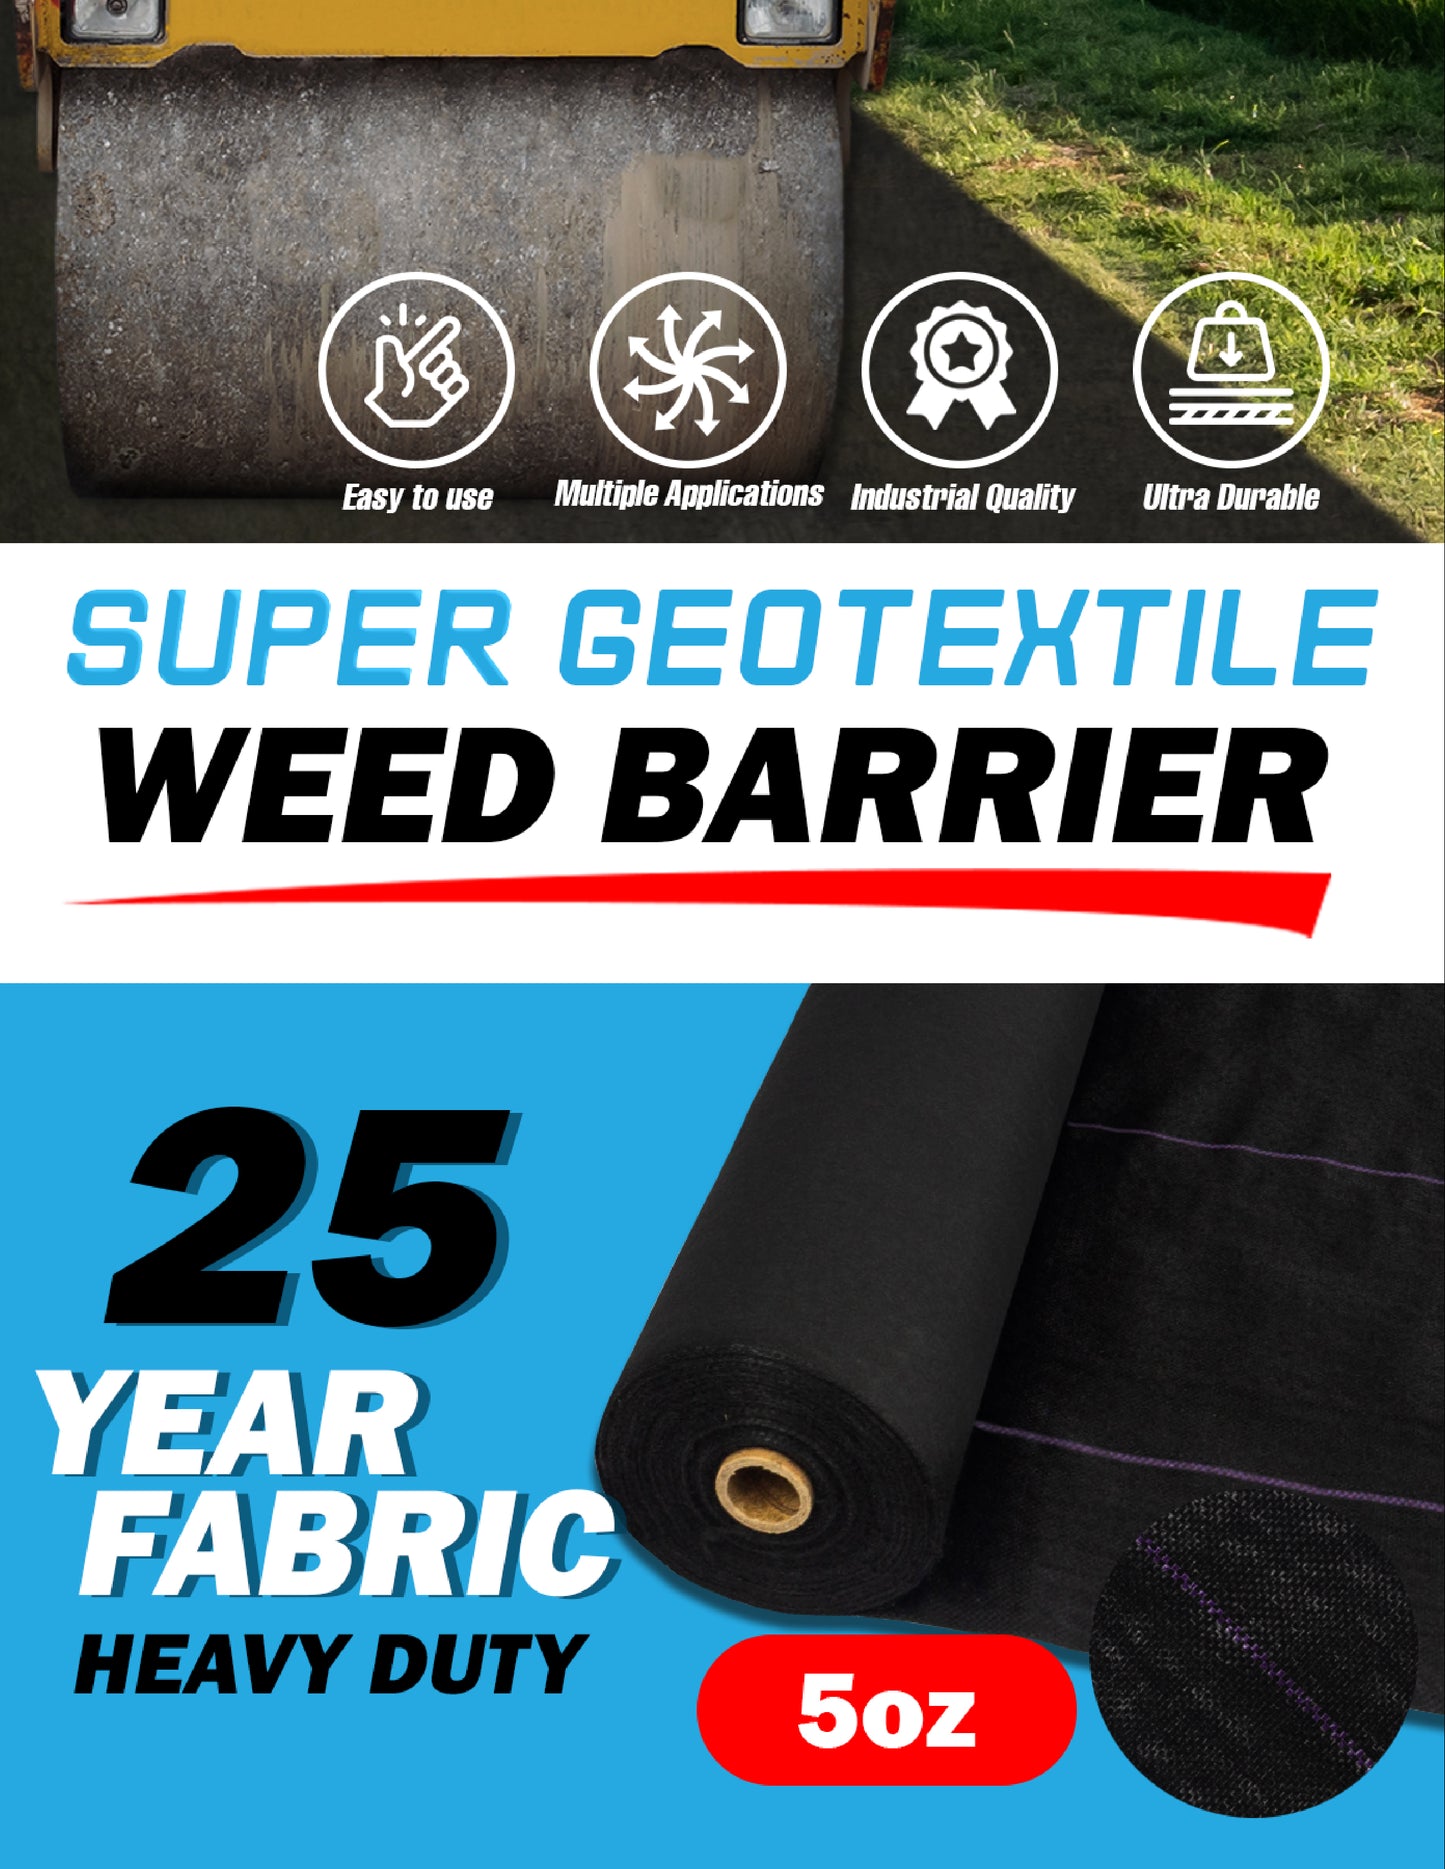 Pro Grade 5oz Weed Barrier - Heavy Duty Landscape Fabric - Weed Block - 25 Year Fabric